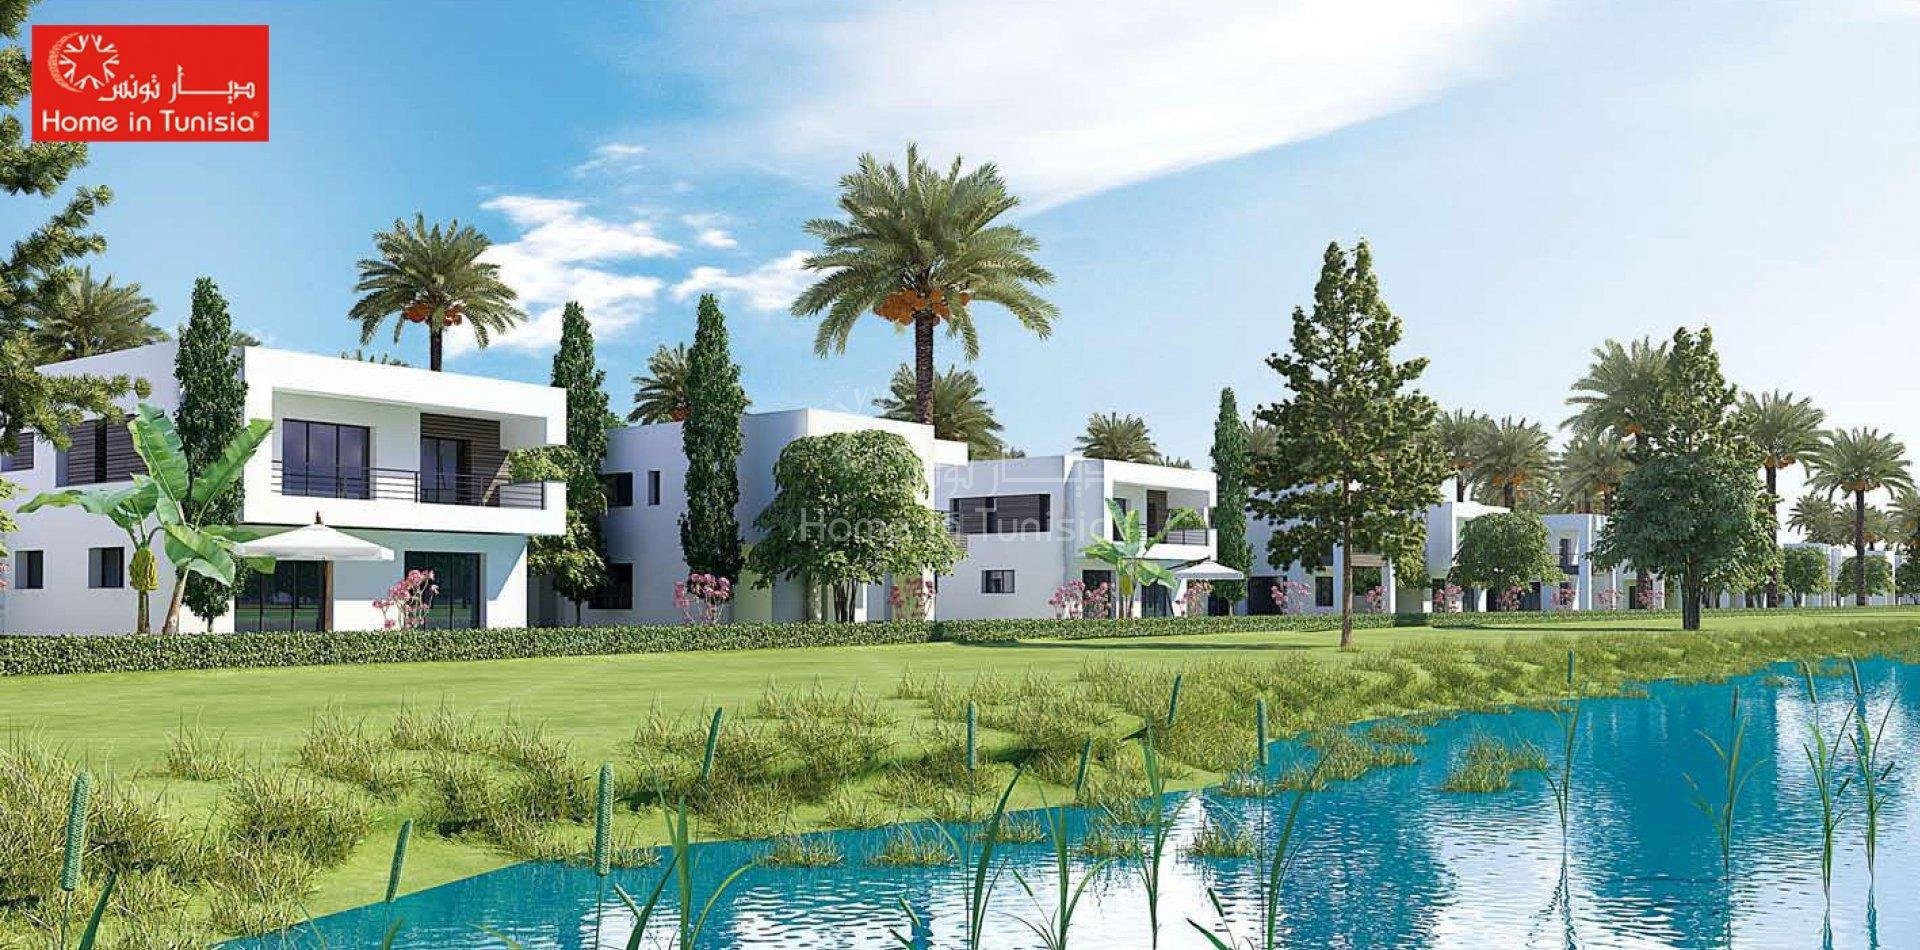 Villa golf jumelée neuve de 278.77 m2 avec 4 chambres terrasse jardin piscine